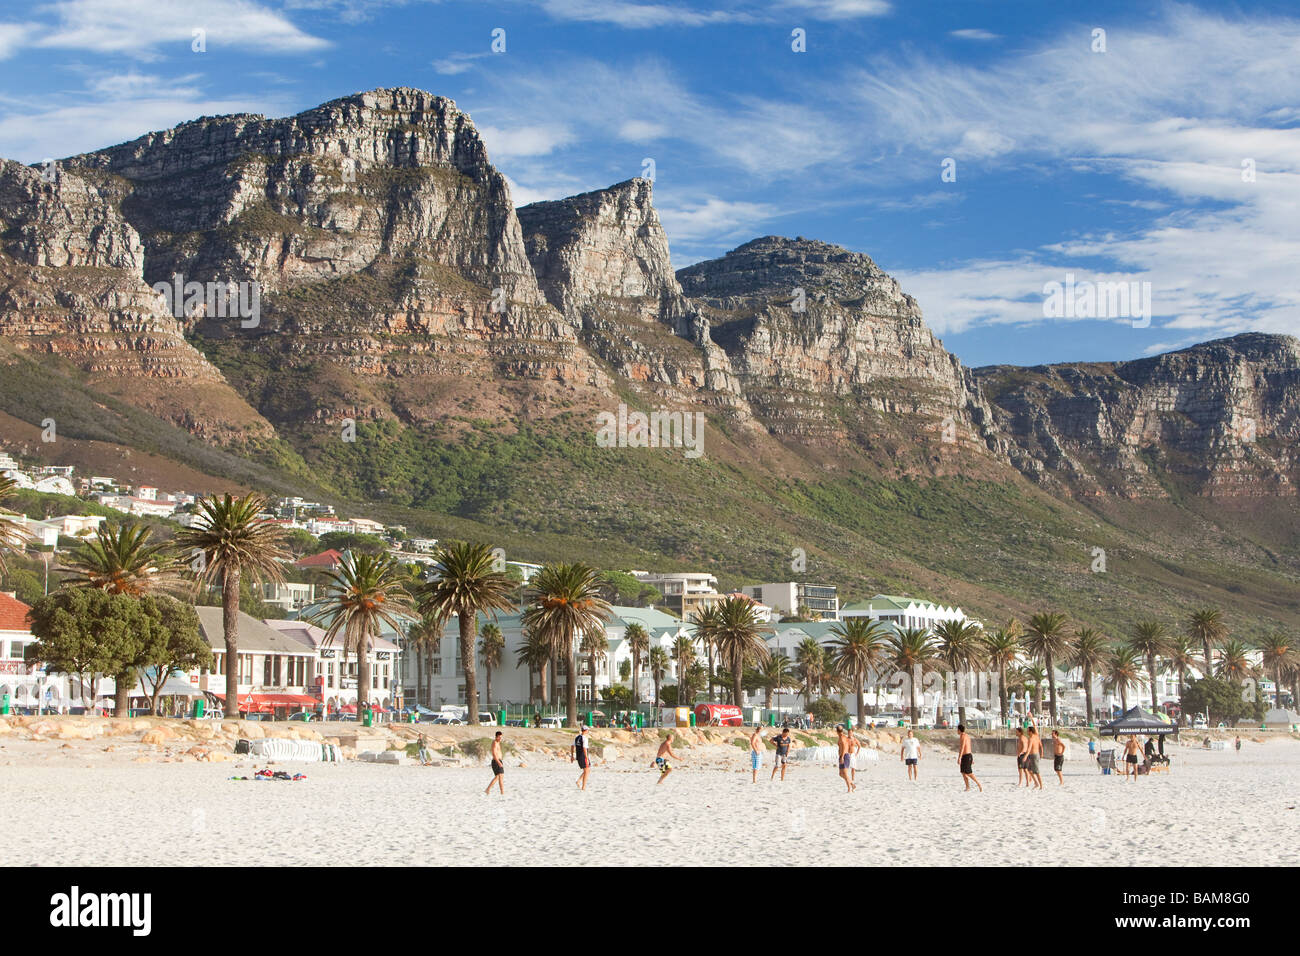 A football game on a Cape Town beach Stock Photo